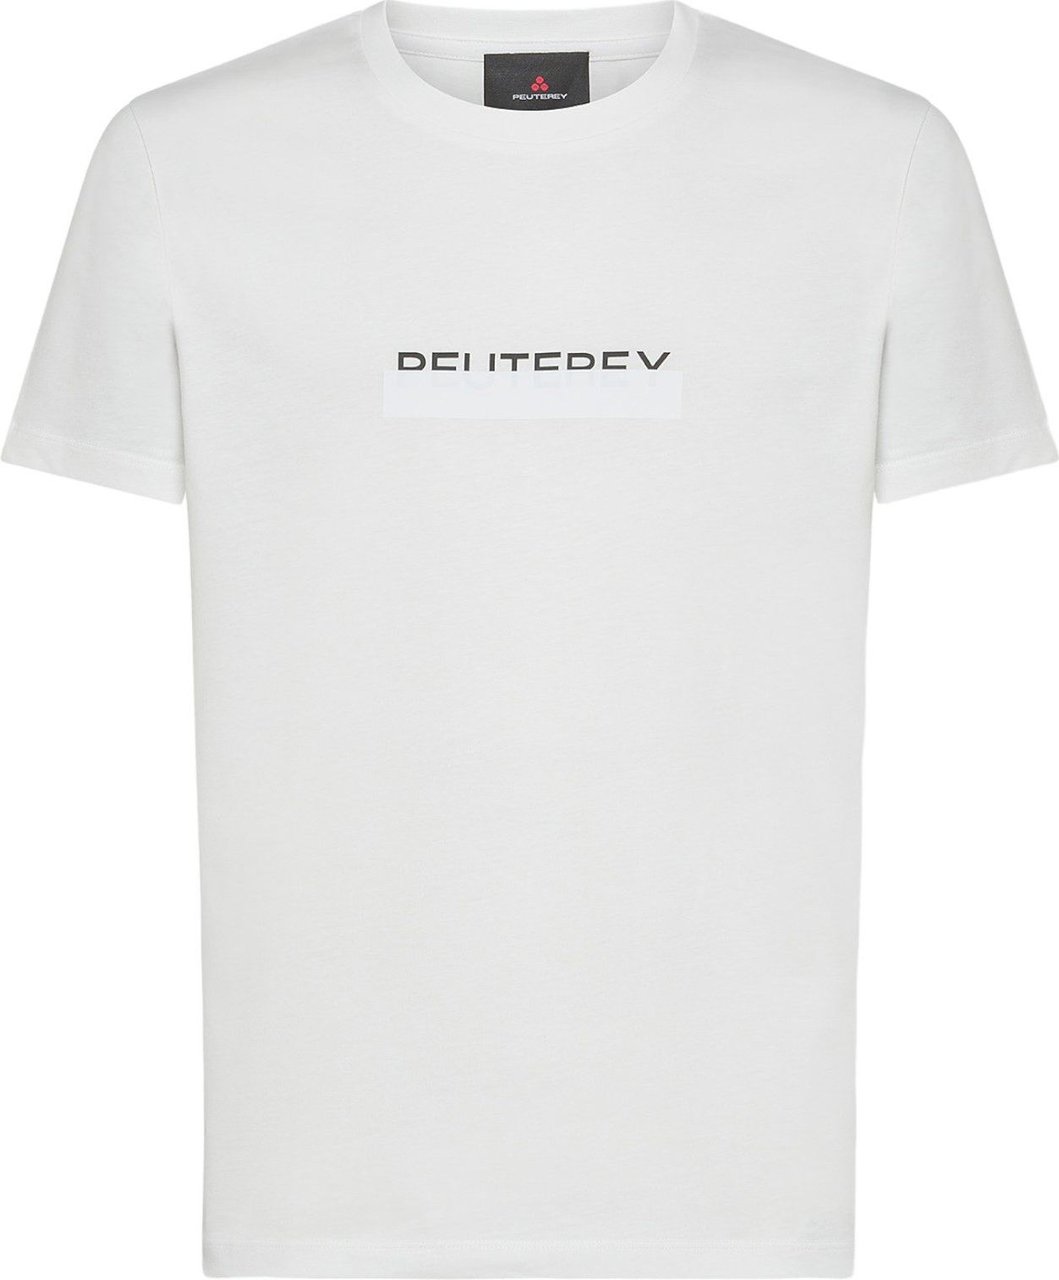 Peuterey Peuterey Heren T-shirt Wit PEU5136/730 MANDERLY Wit